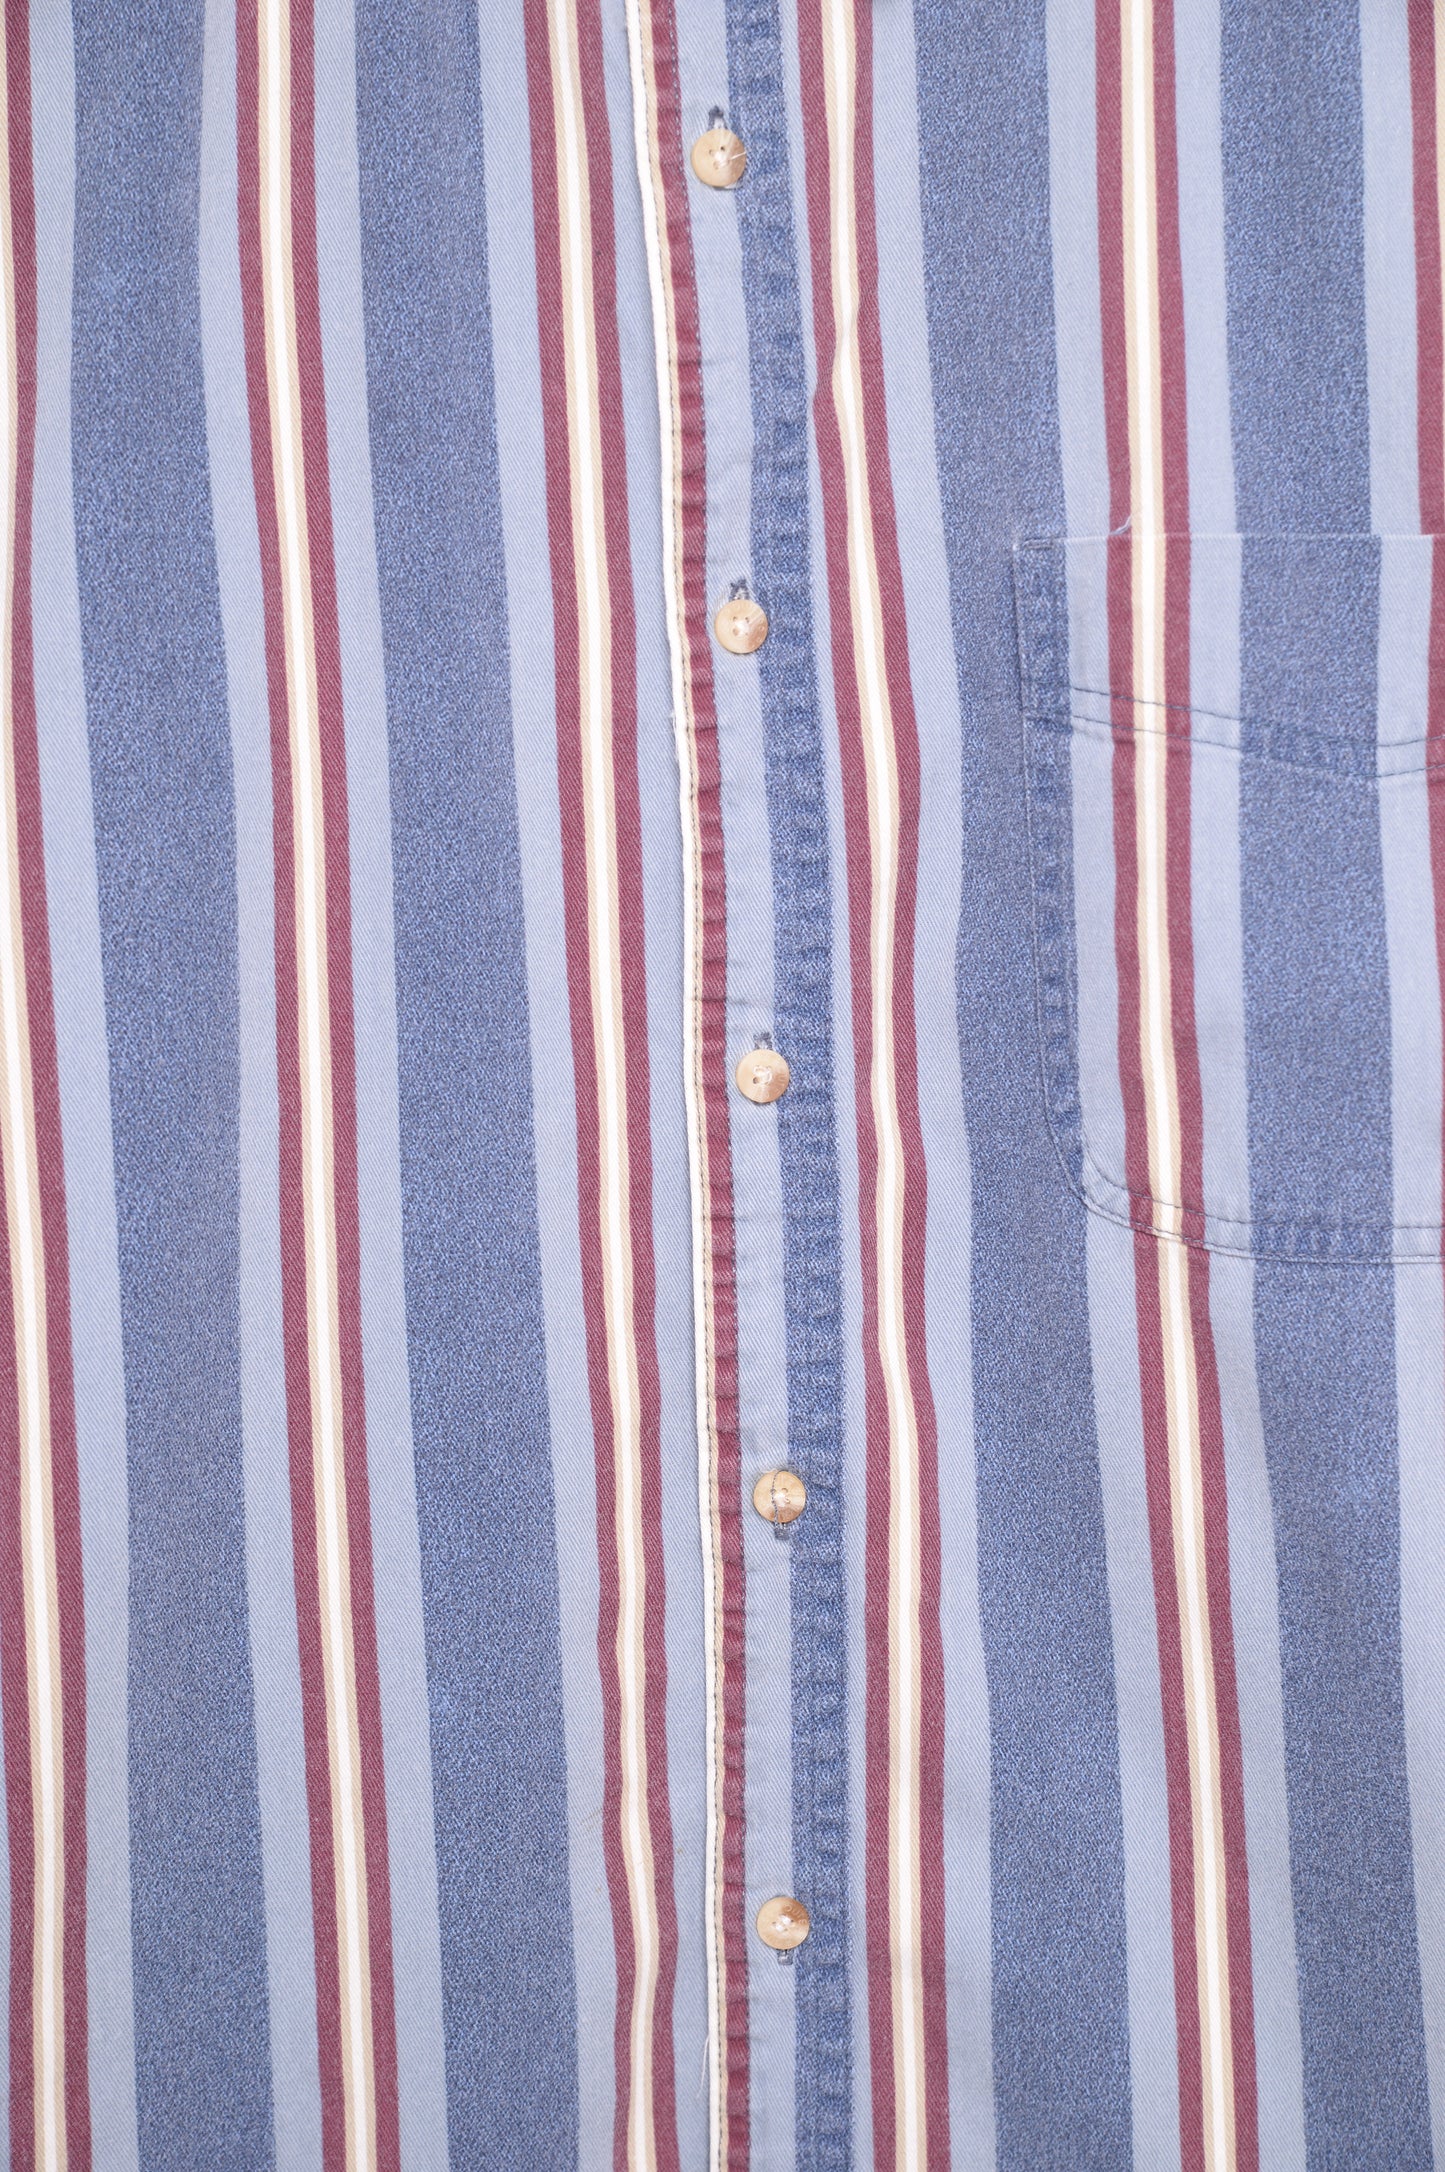 1990s Striped Denim Shirt